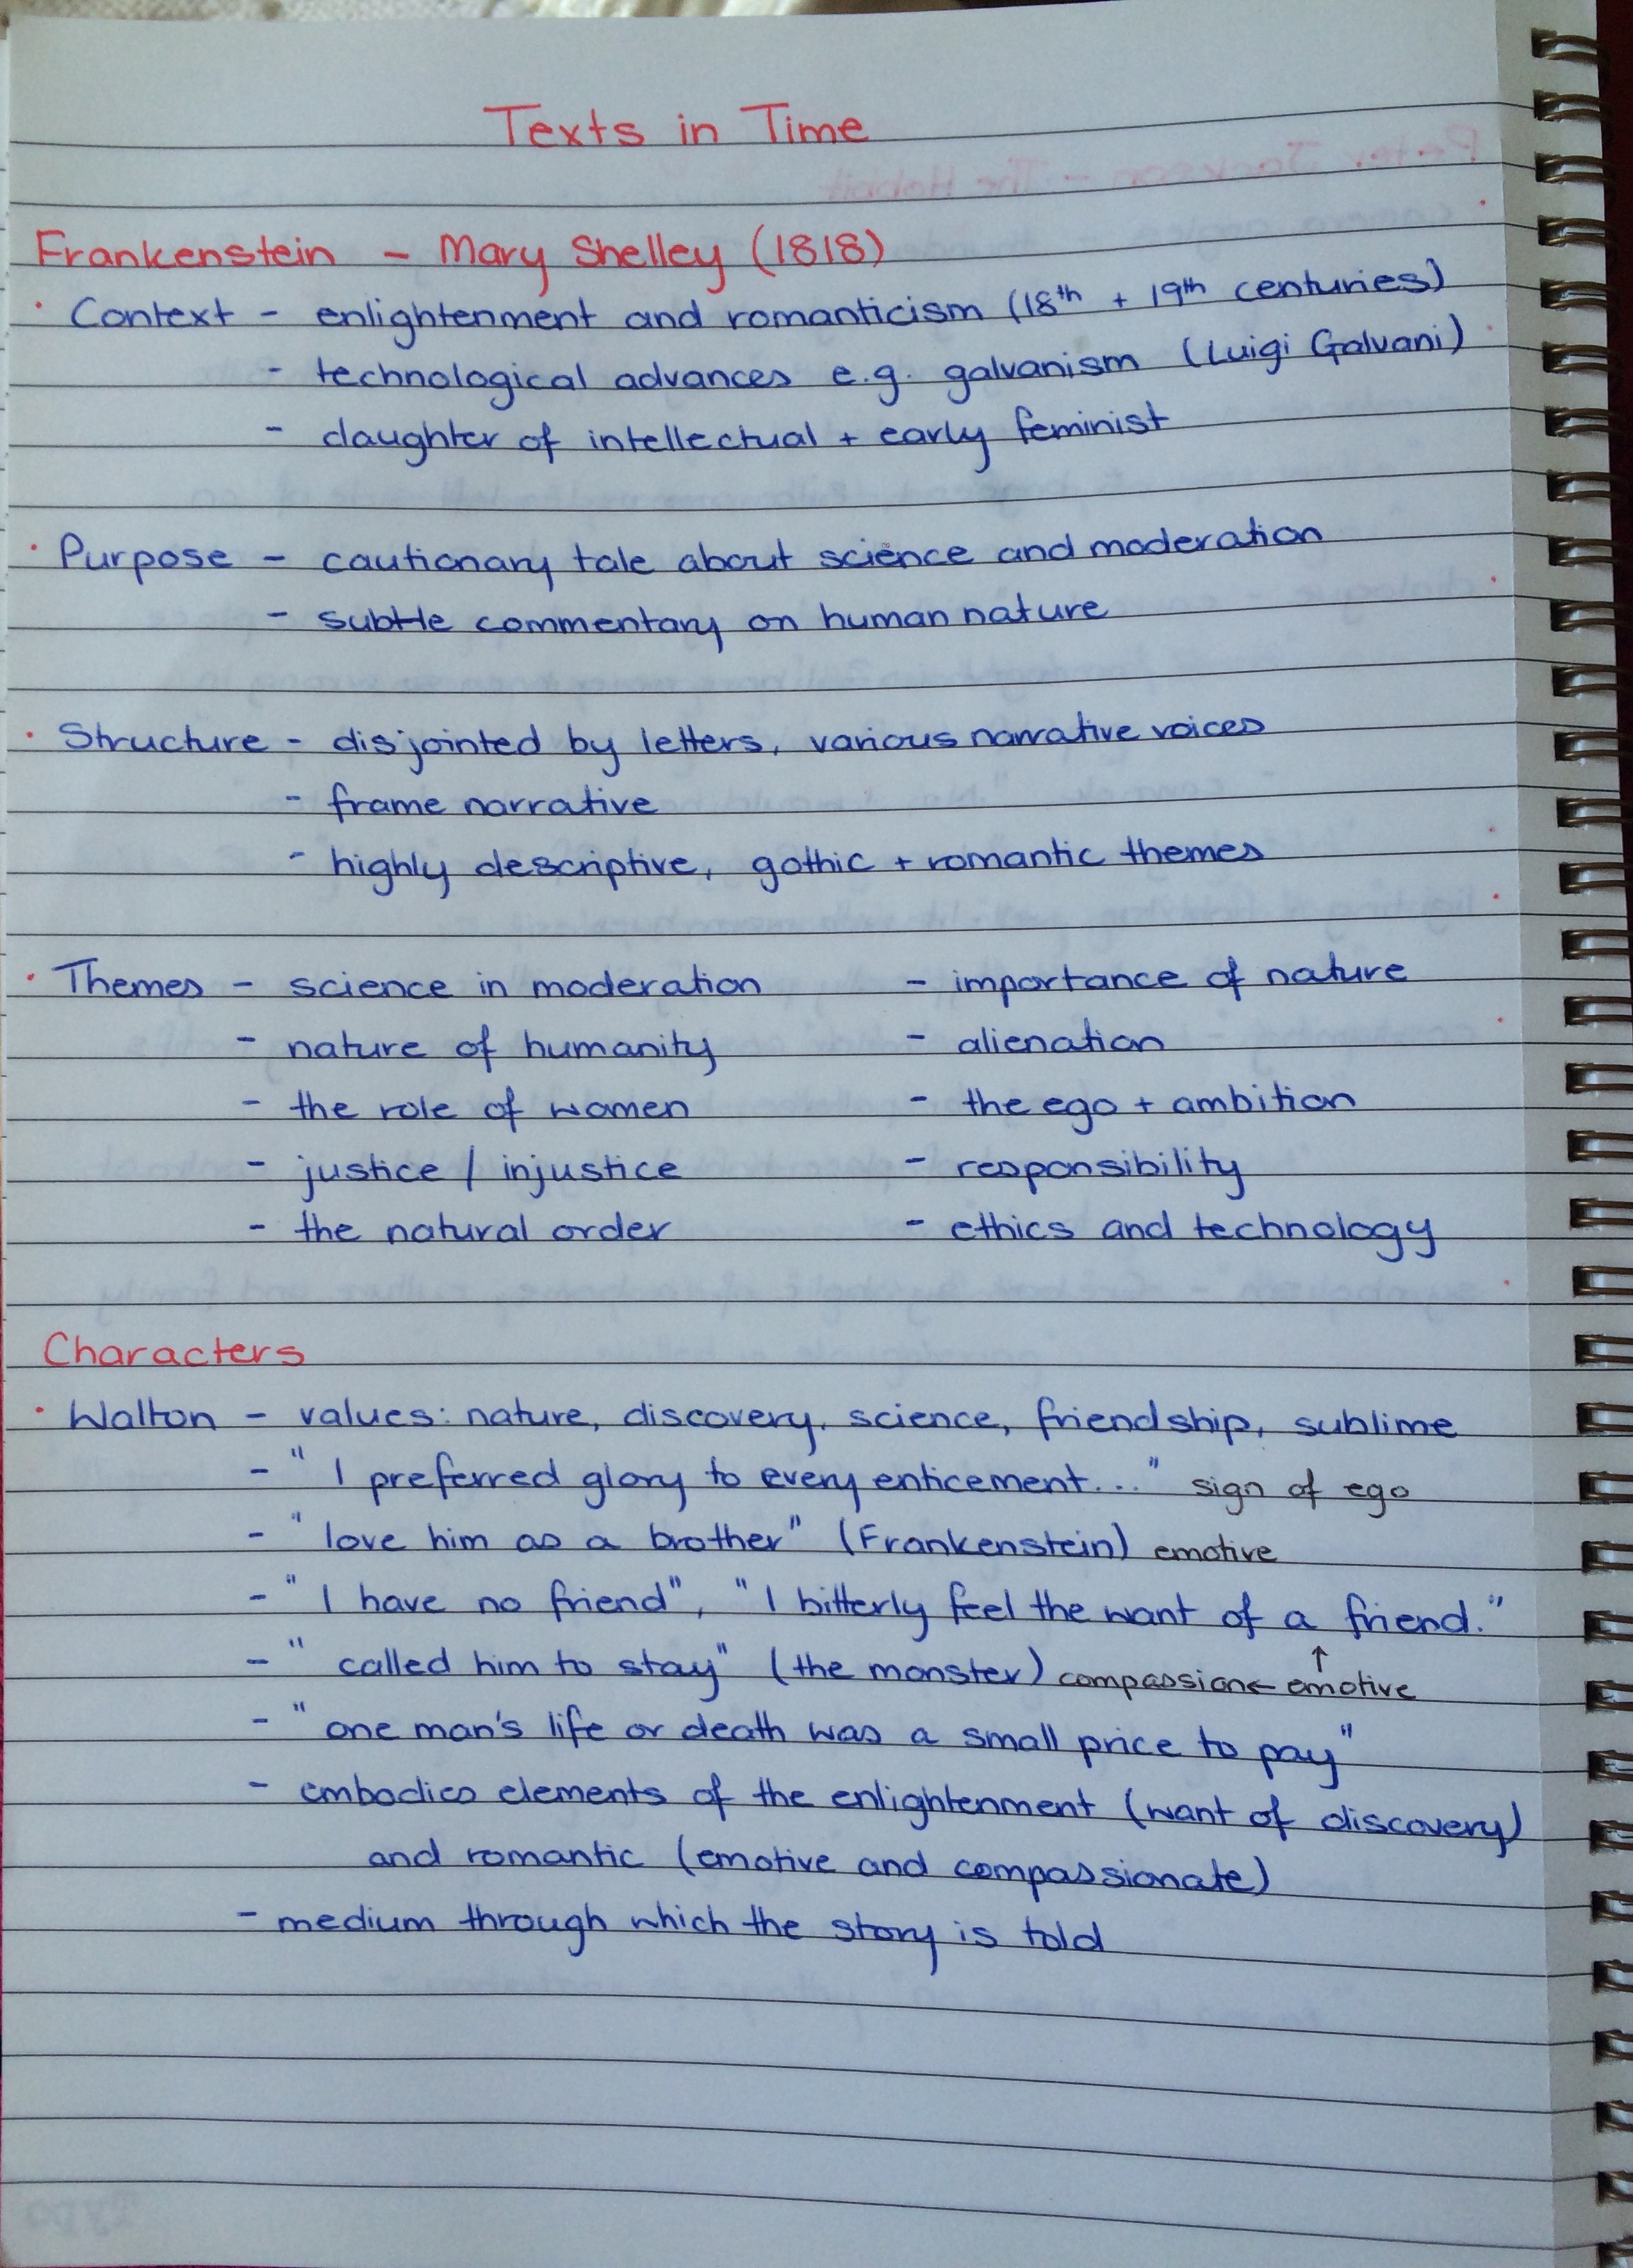 english creative writing notes